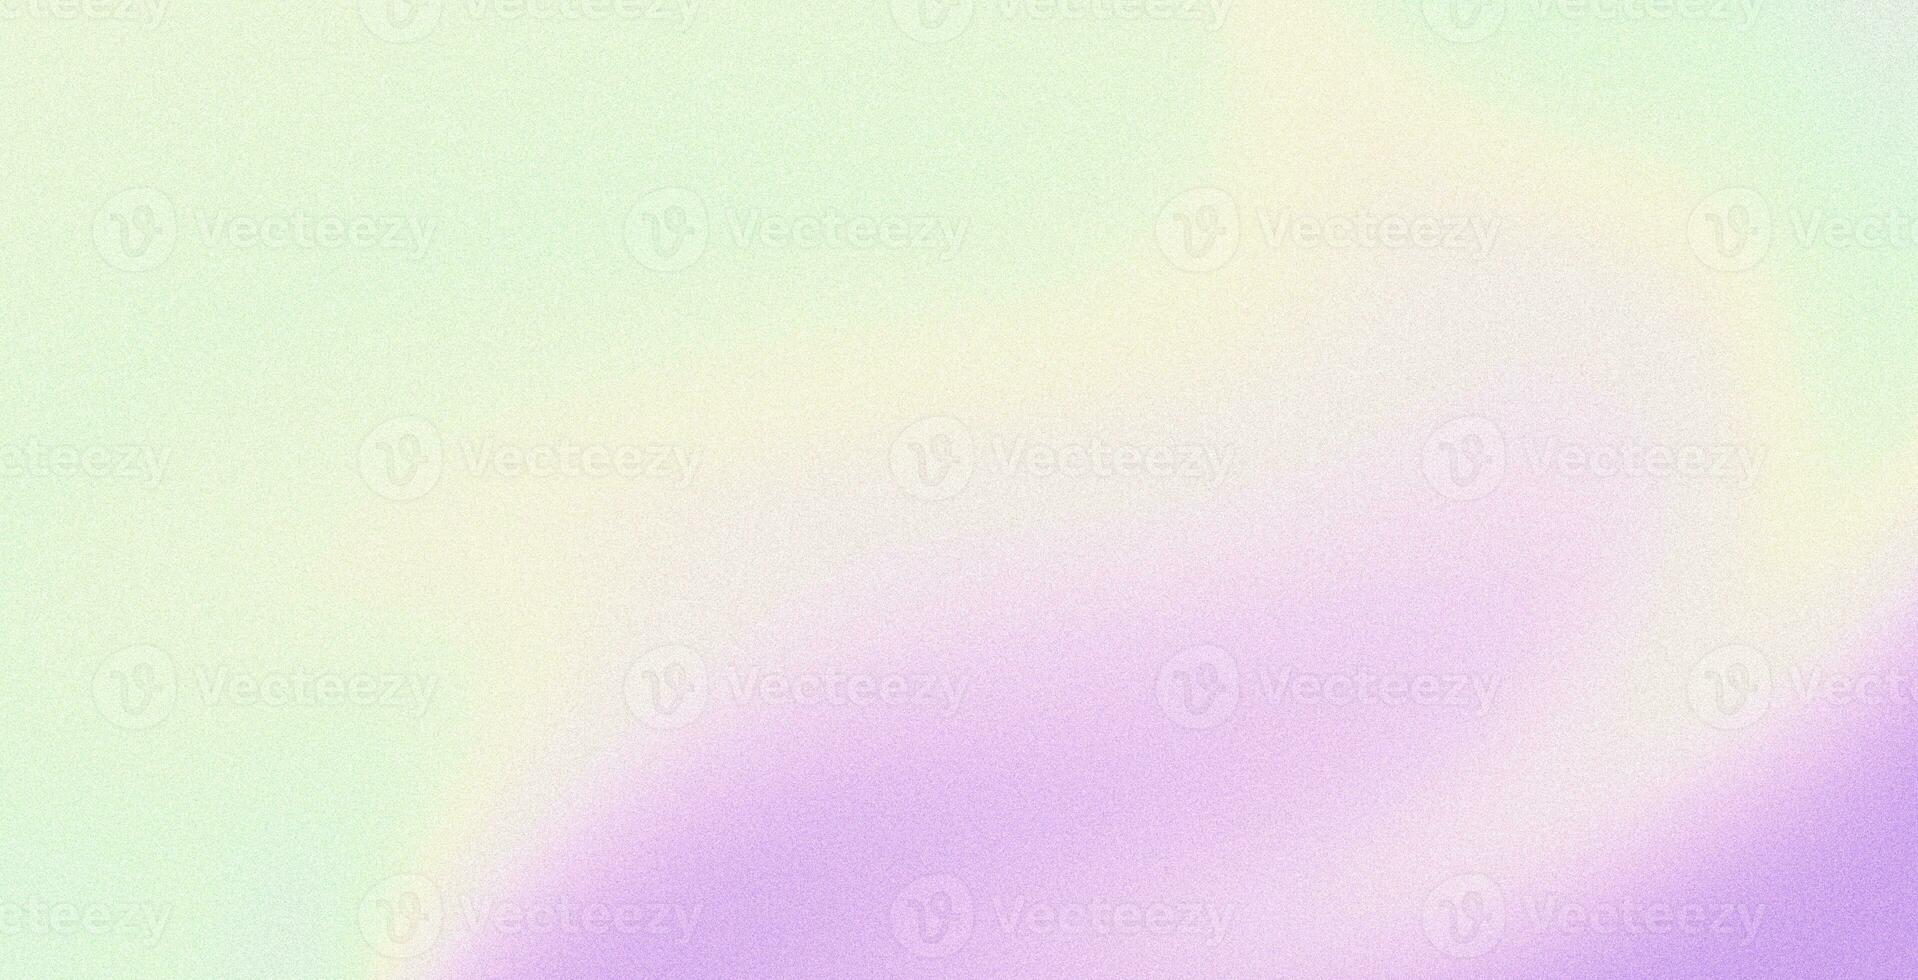 pastel cores gradiente fundo granulado textura holográfico abstrato bandeira cobrir cabeçalho Projeto foto